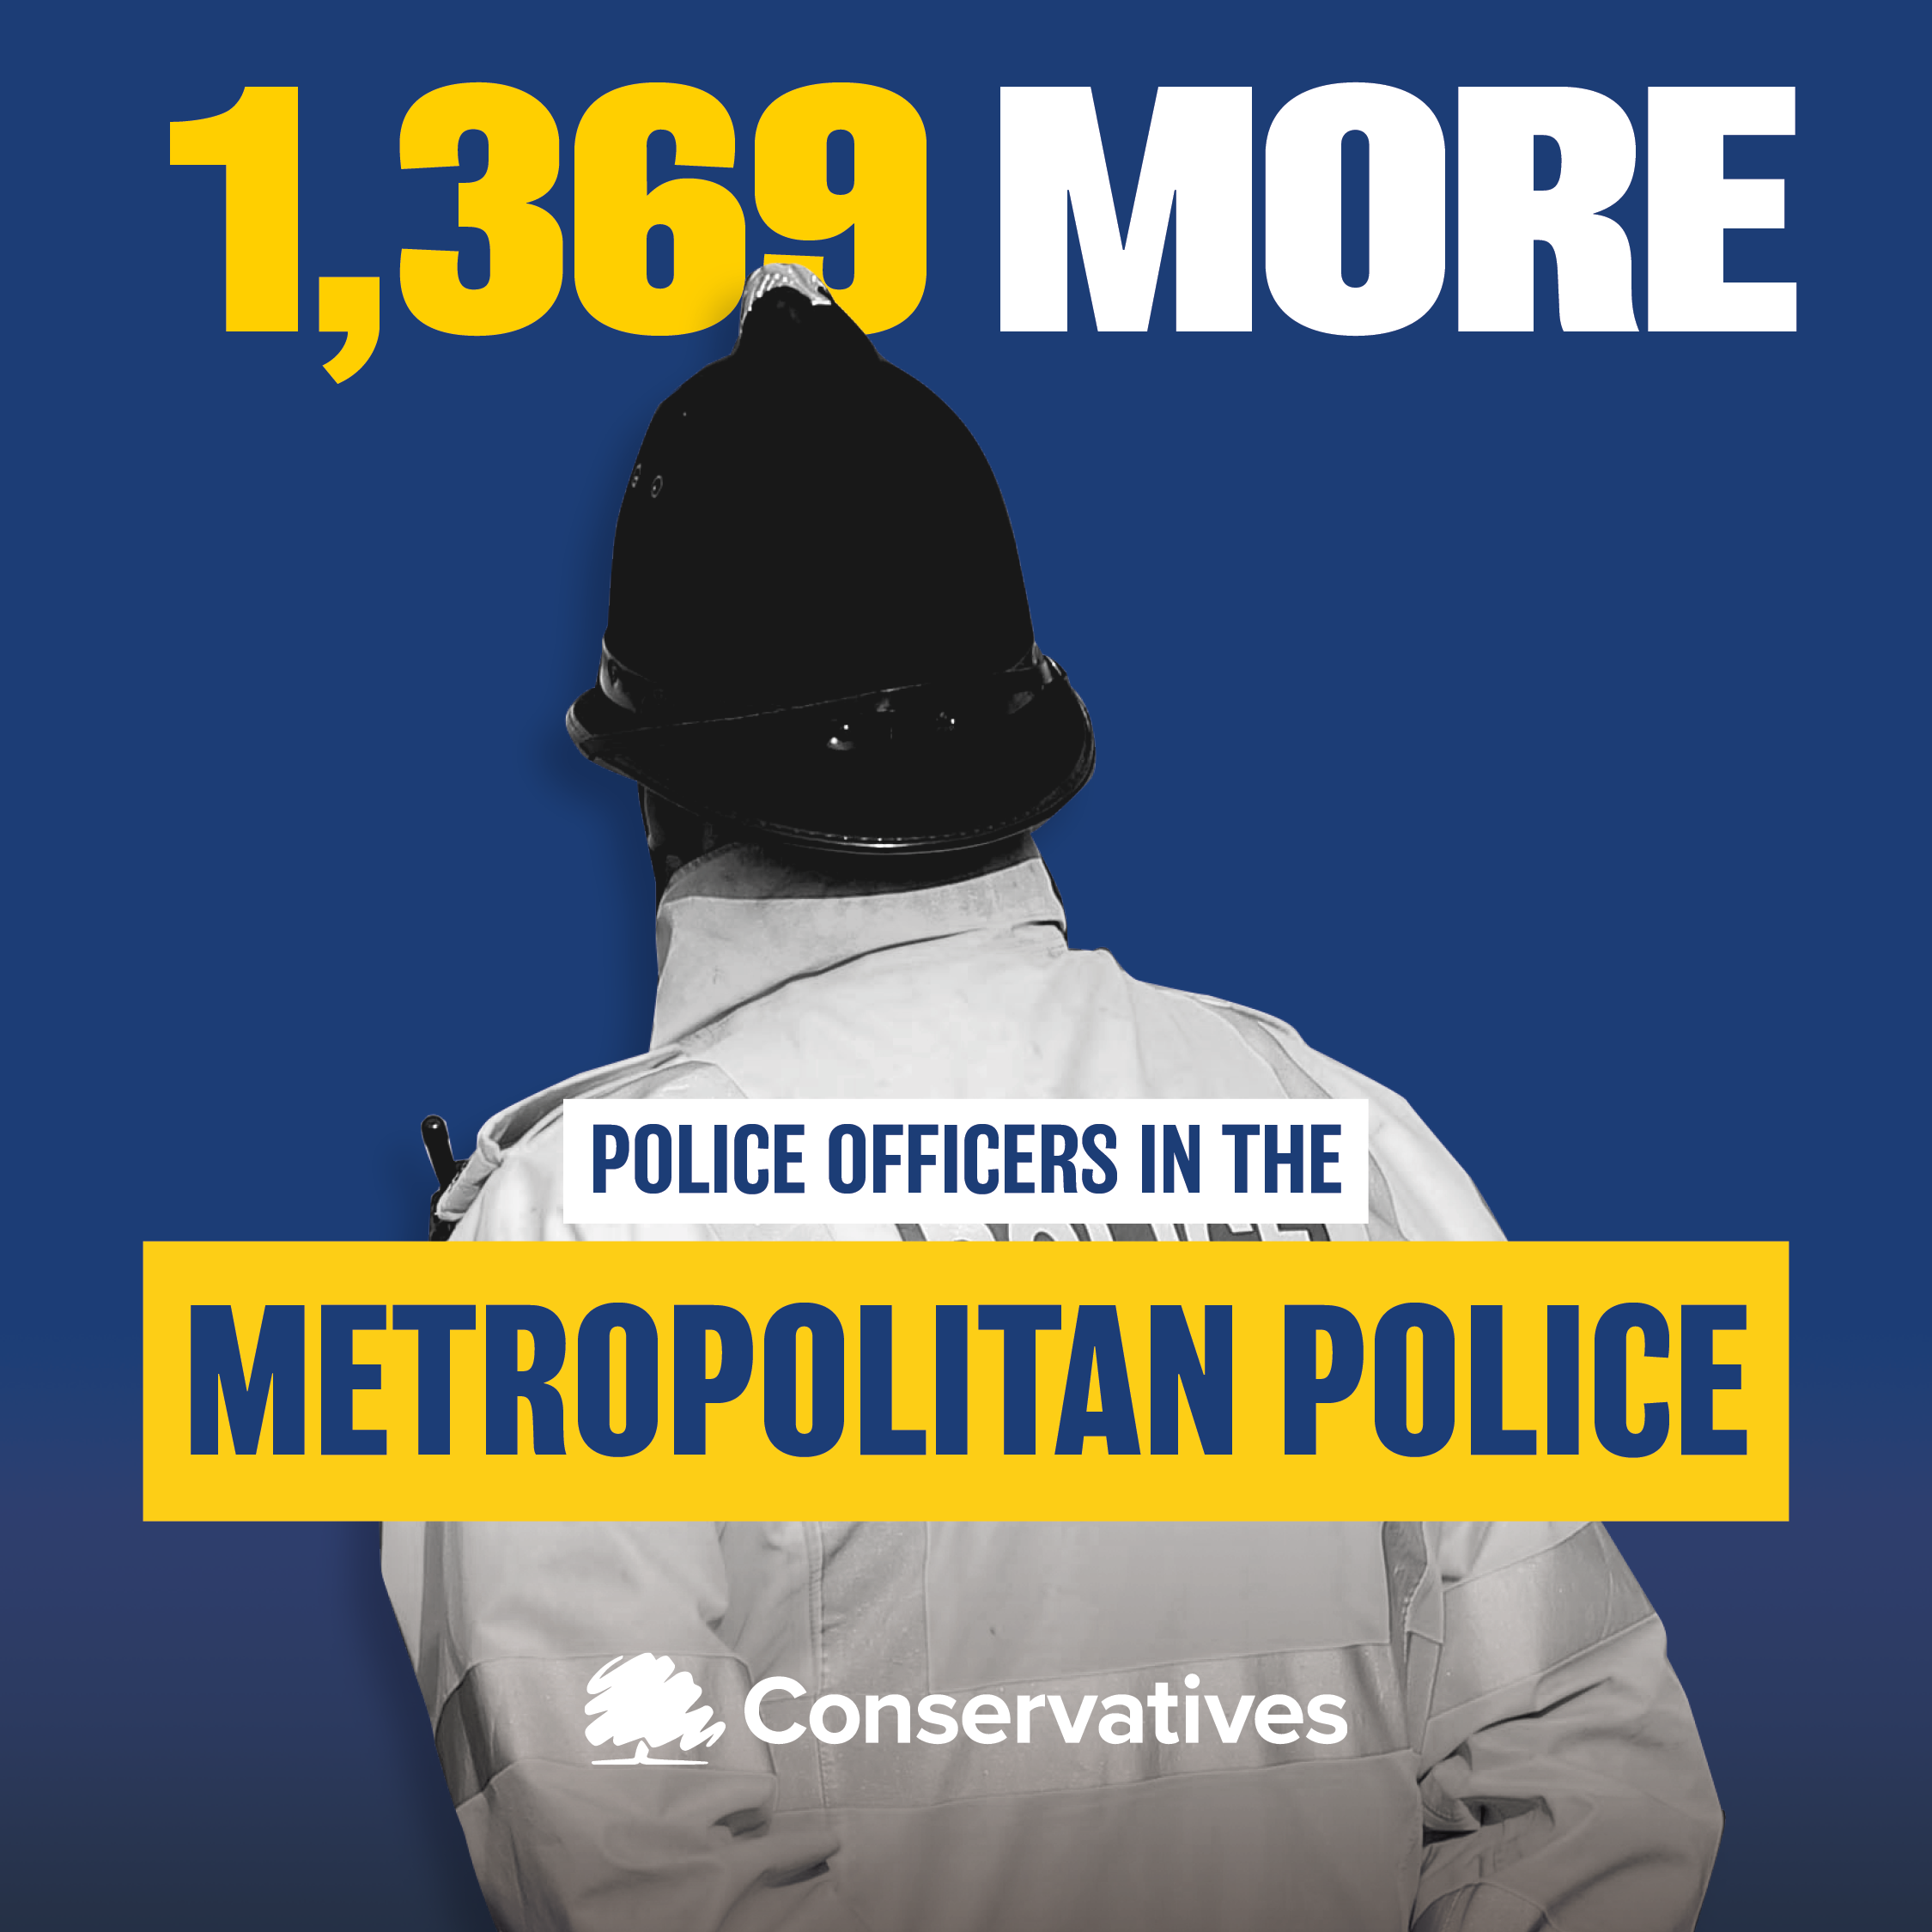 Metropolitan police magazine the job